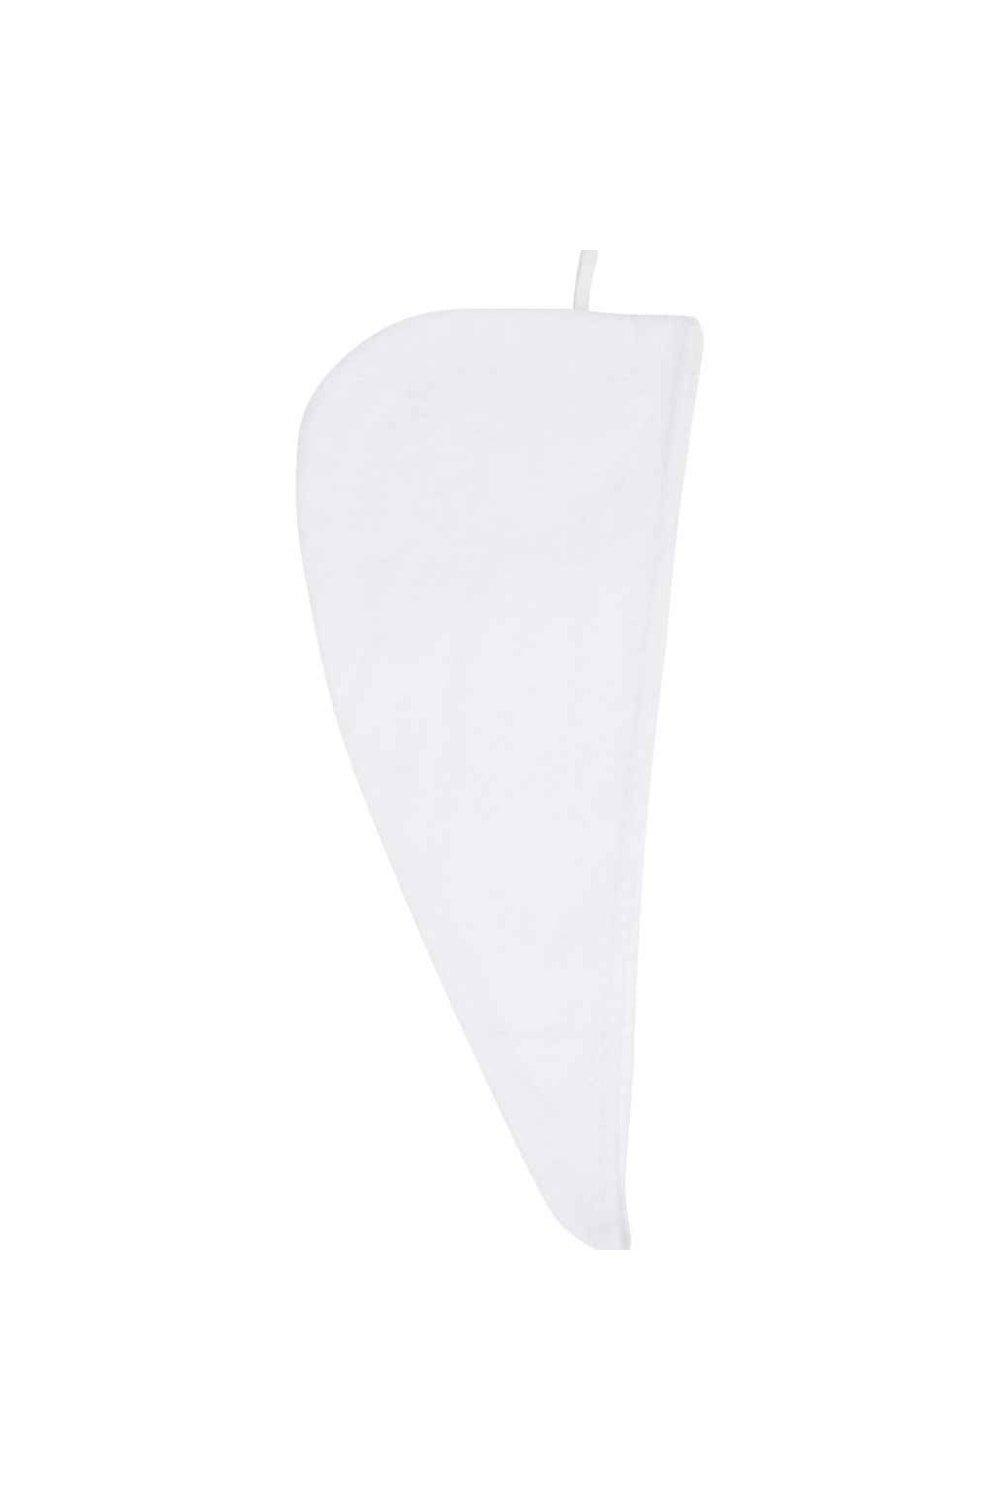 Towel City Hair Wrap Towel|white